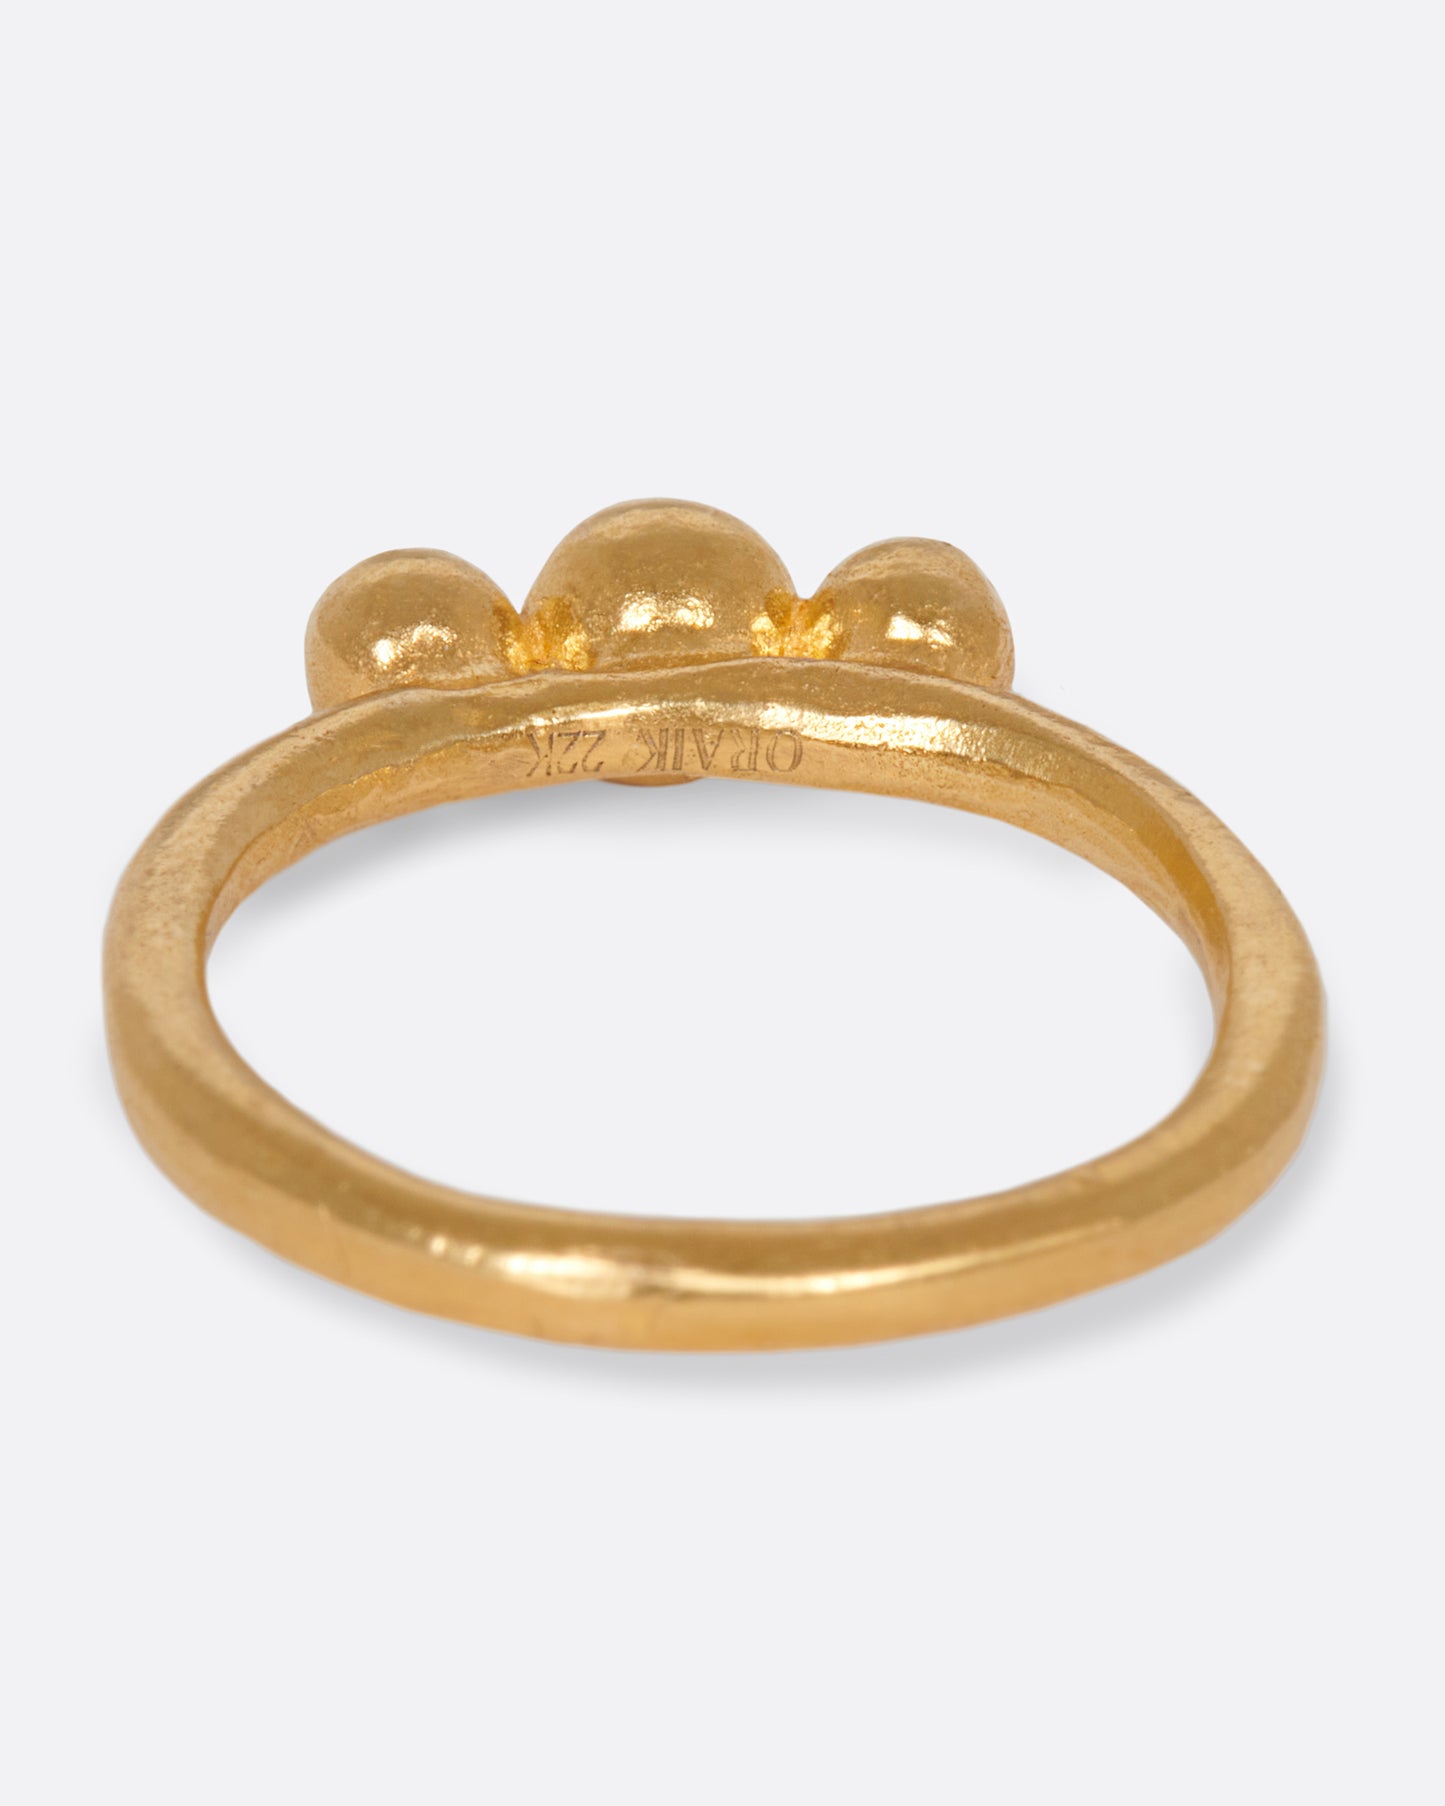 A handmade, high karat gold ring with three vibrant, bezel set aquamarines.